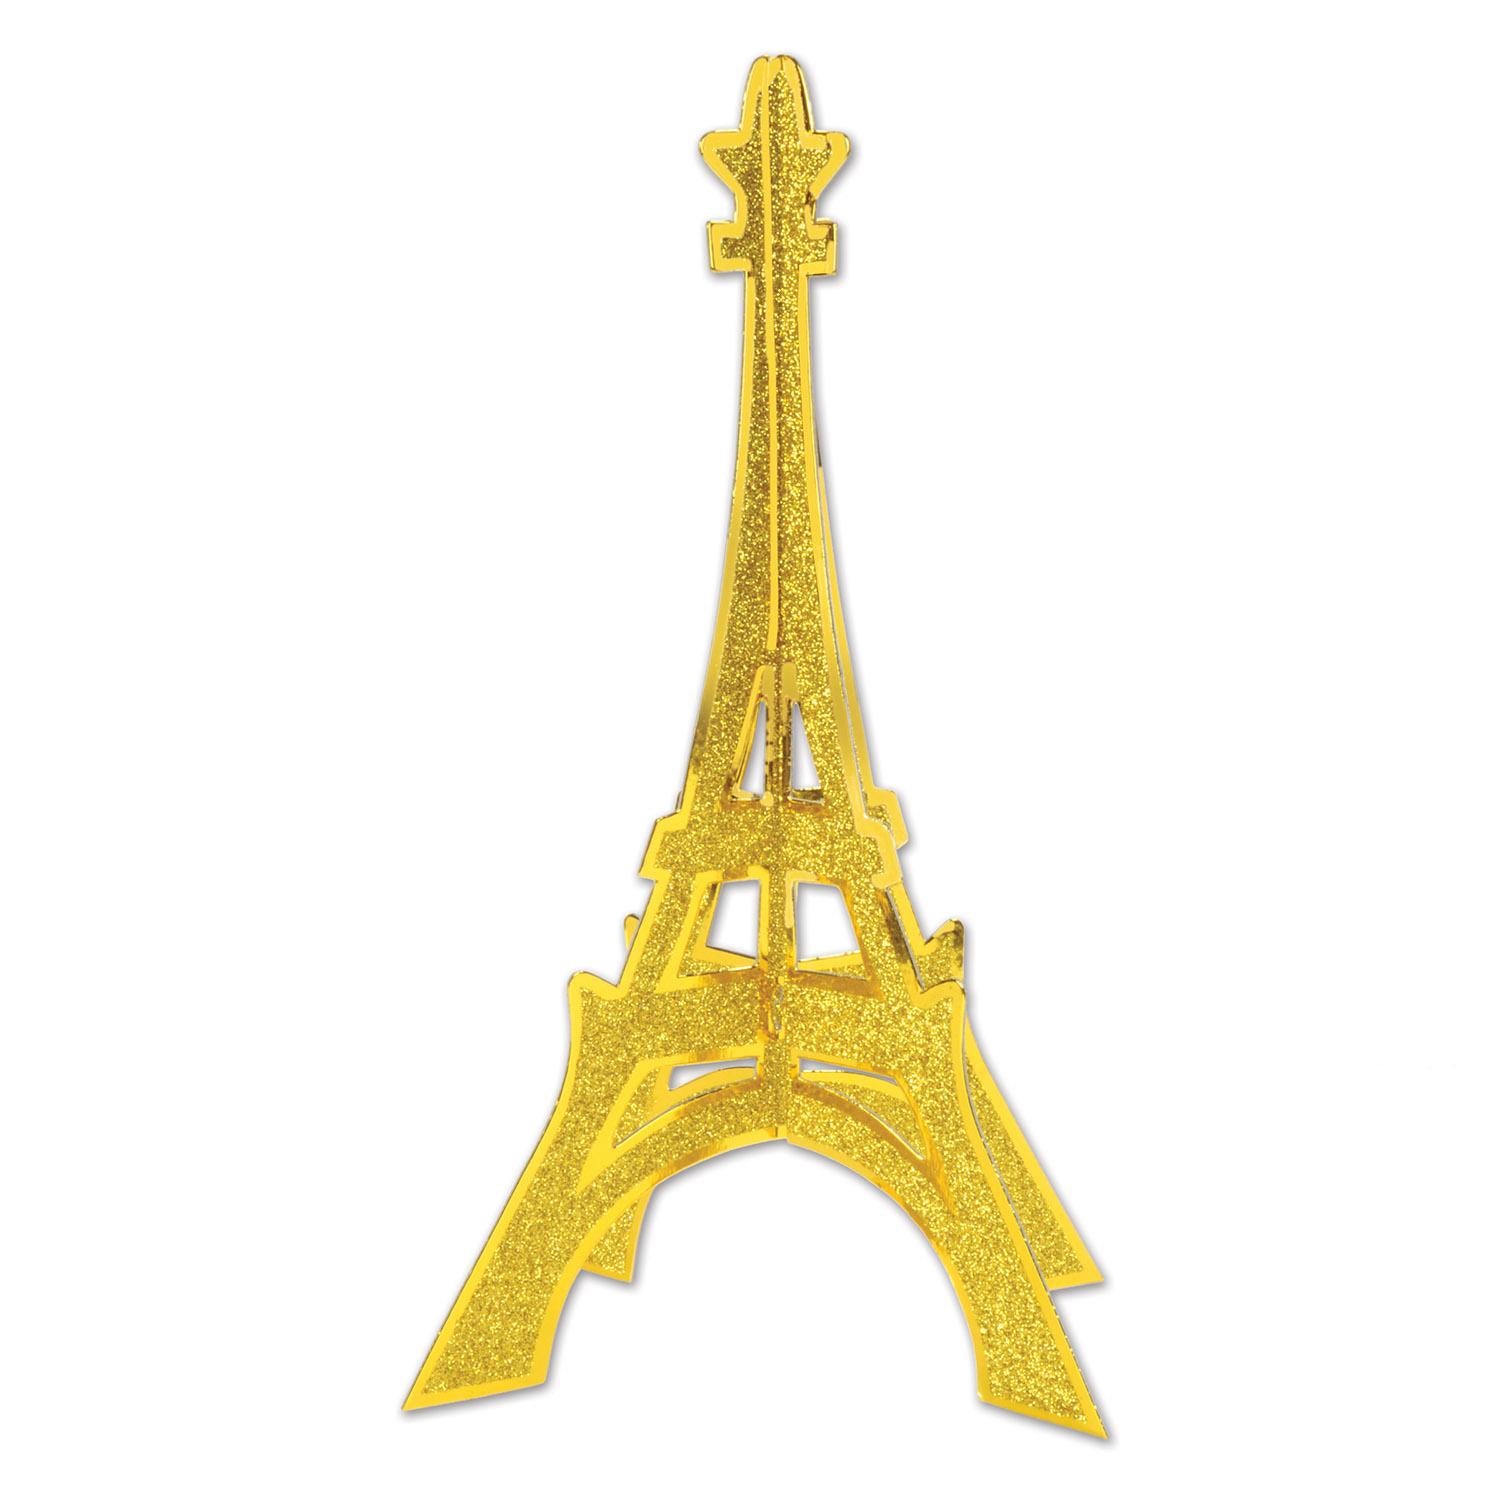 Beistle 3-D Glittered Eiffel Tower Party Centerpiece